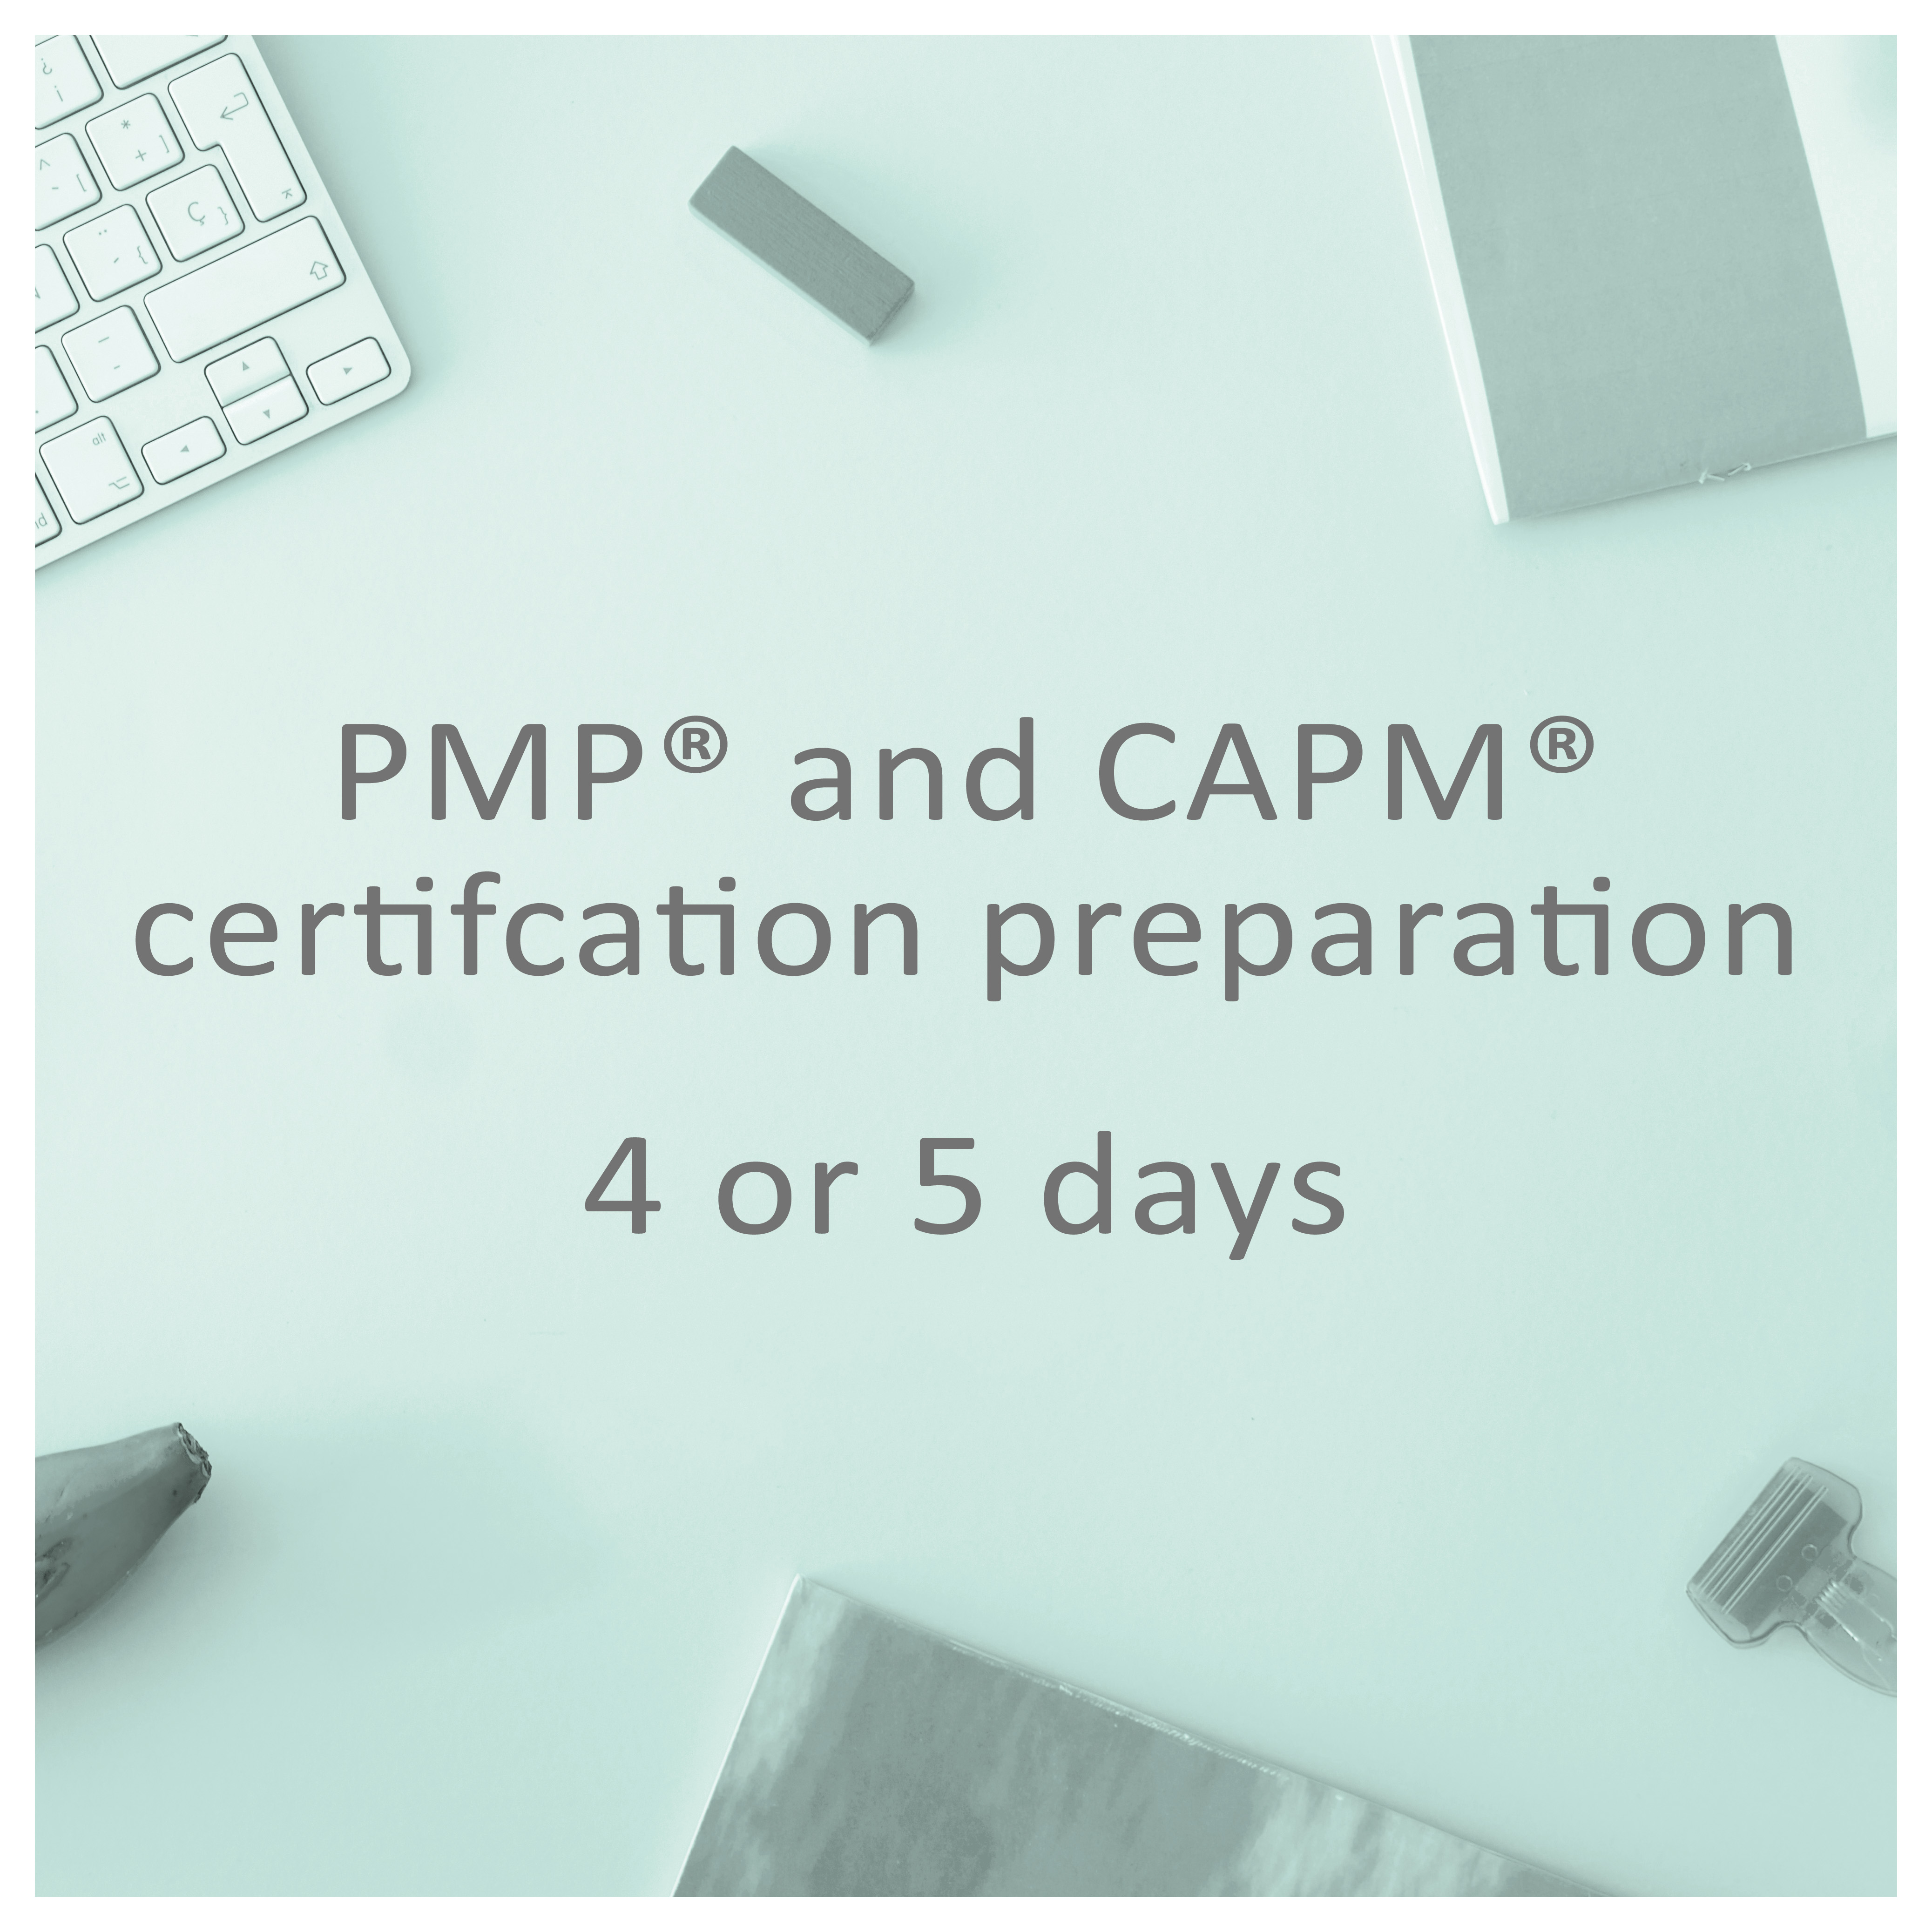 PMP and CAPM certifcation preparation